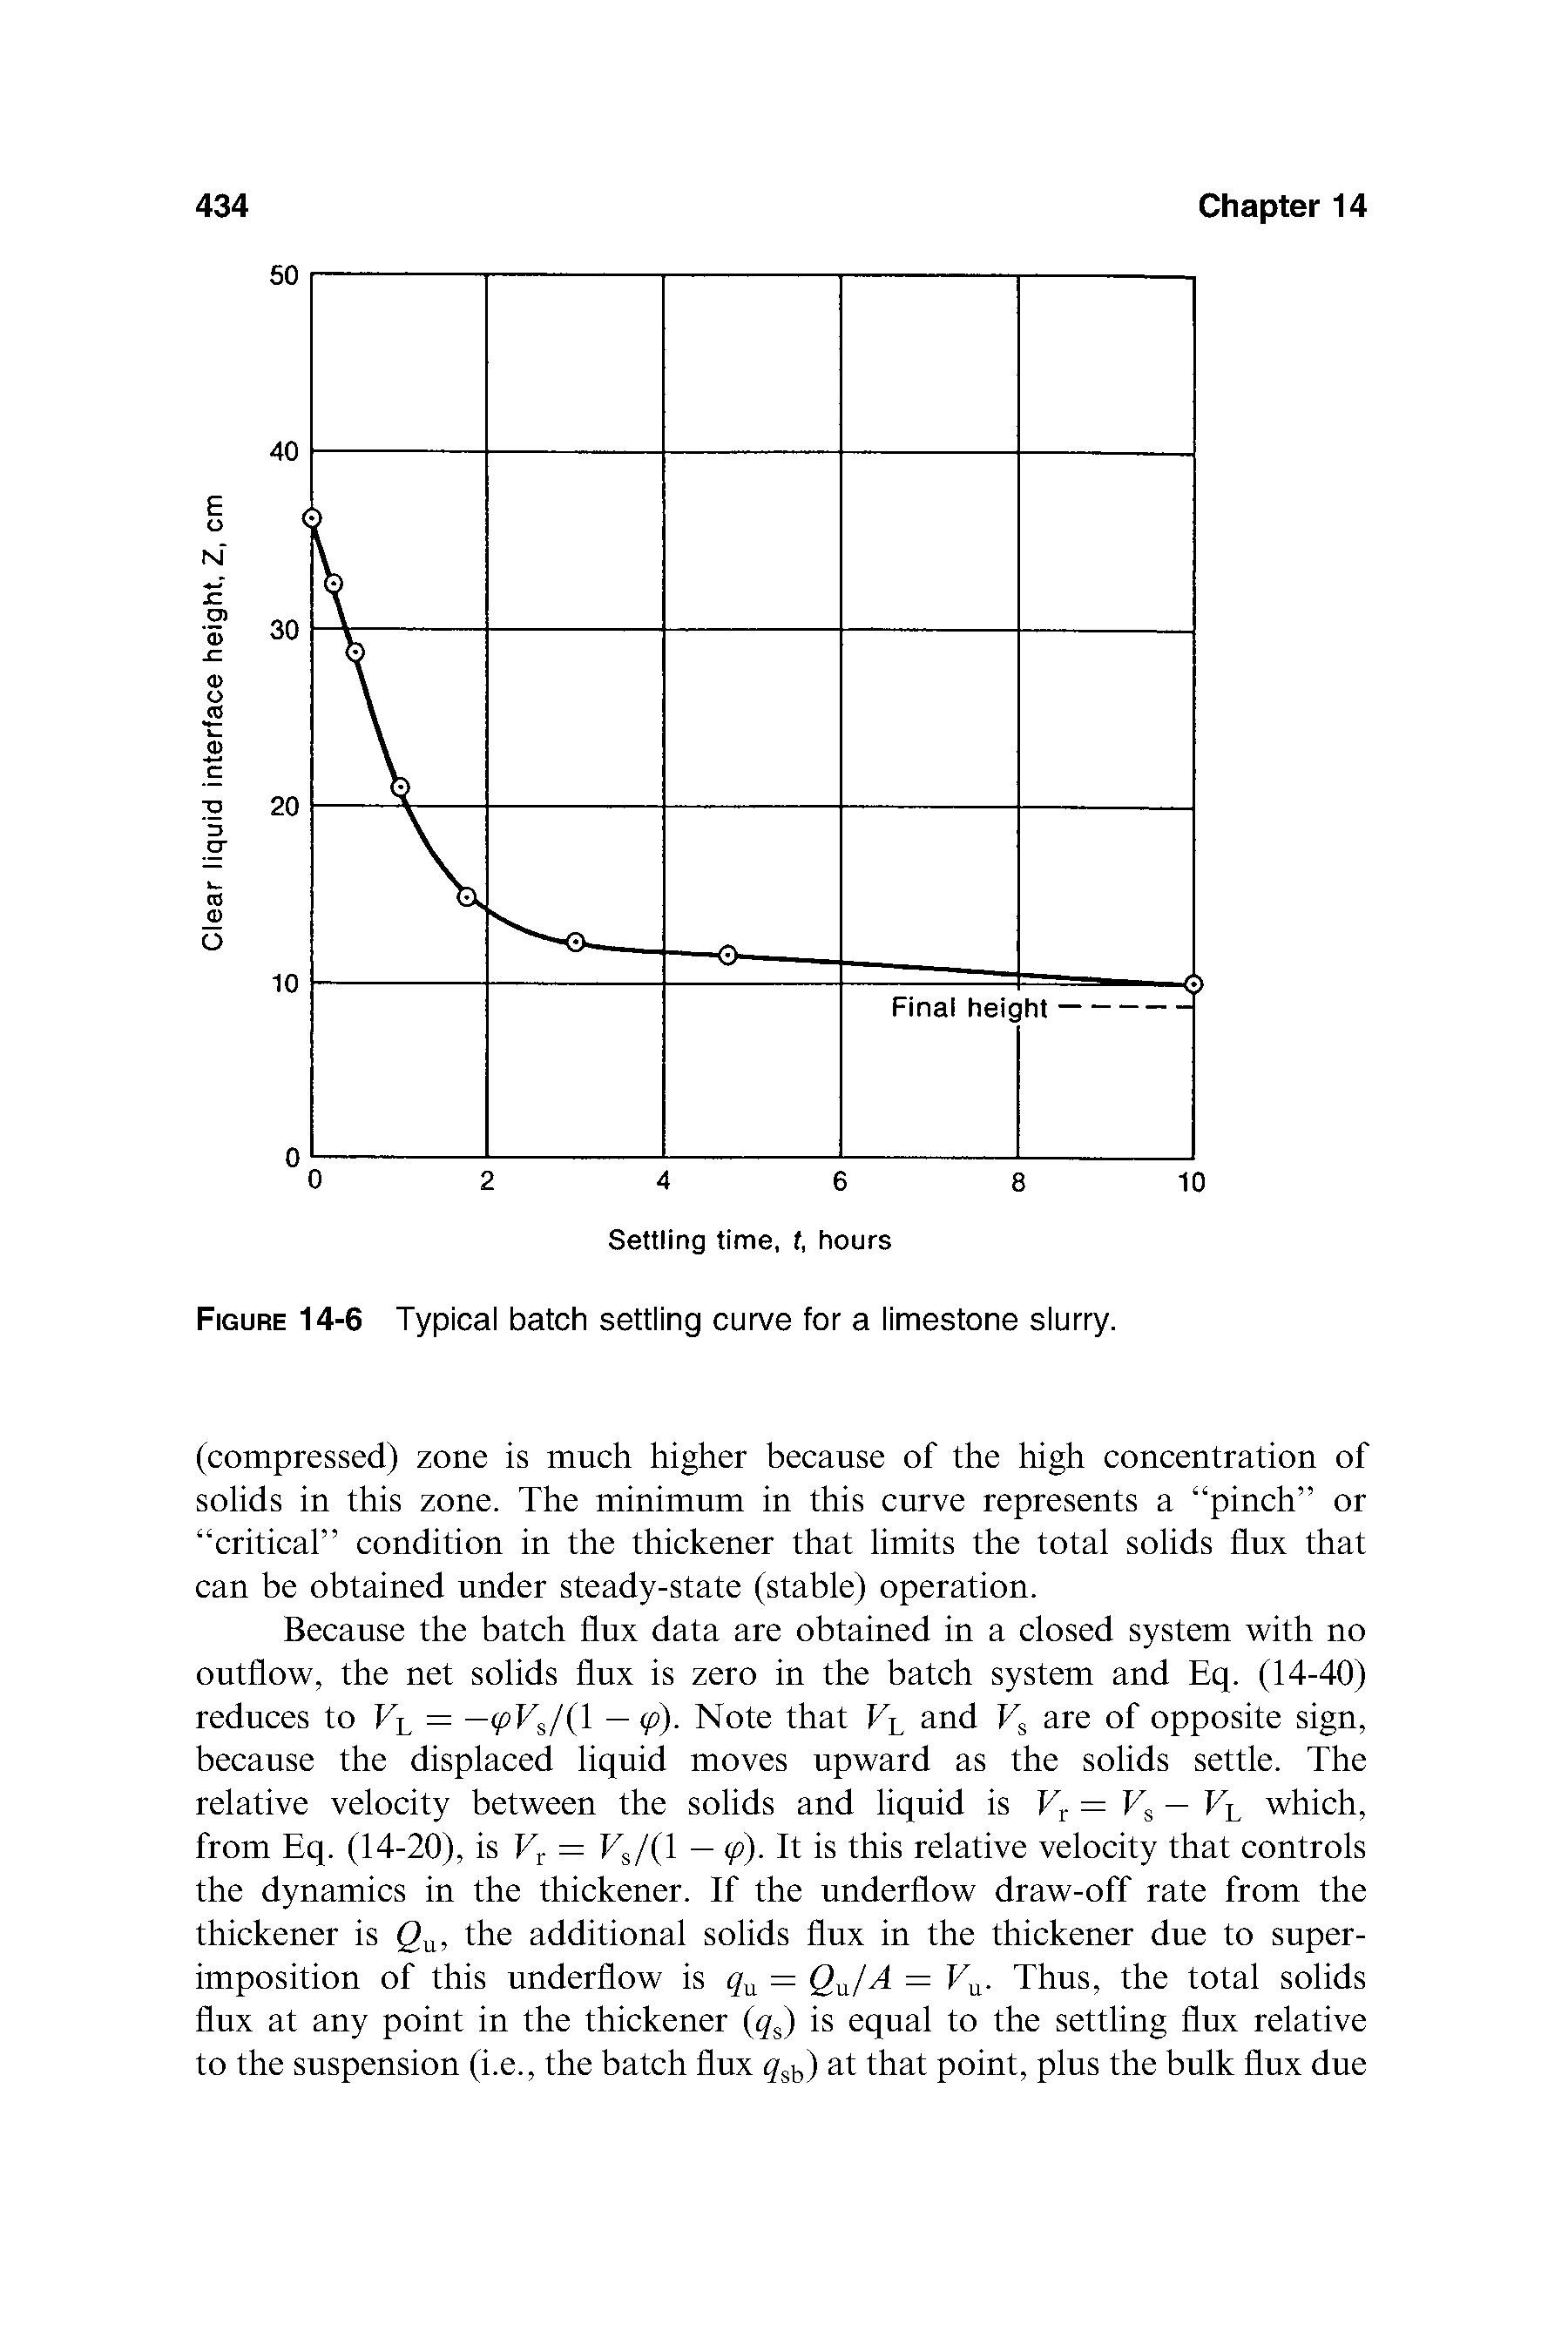 Figure 14-6 Typical batch settling curve for a limestone slurry.